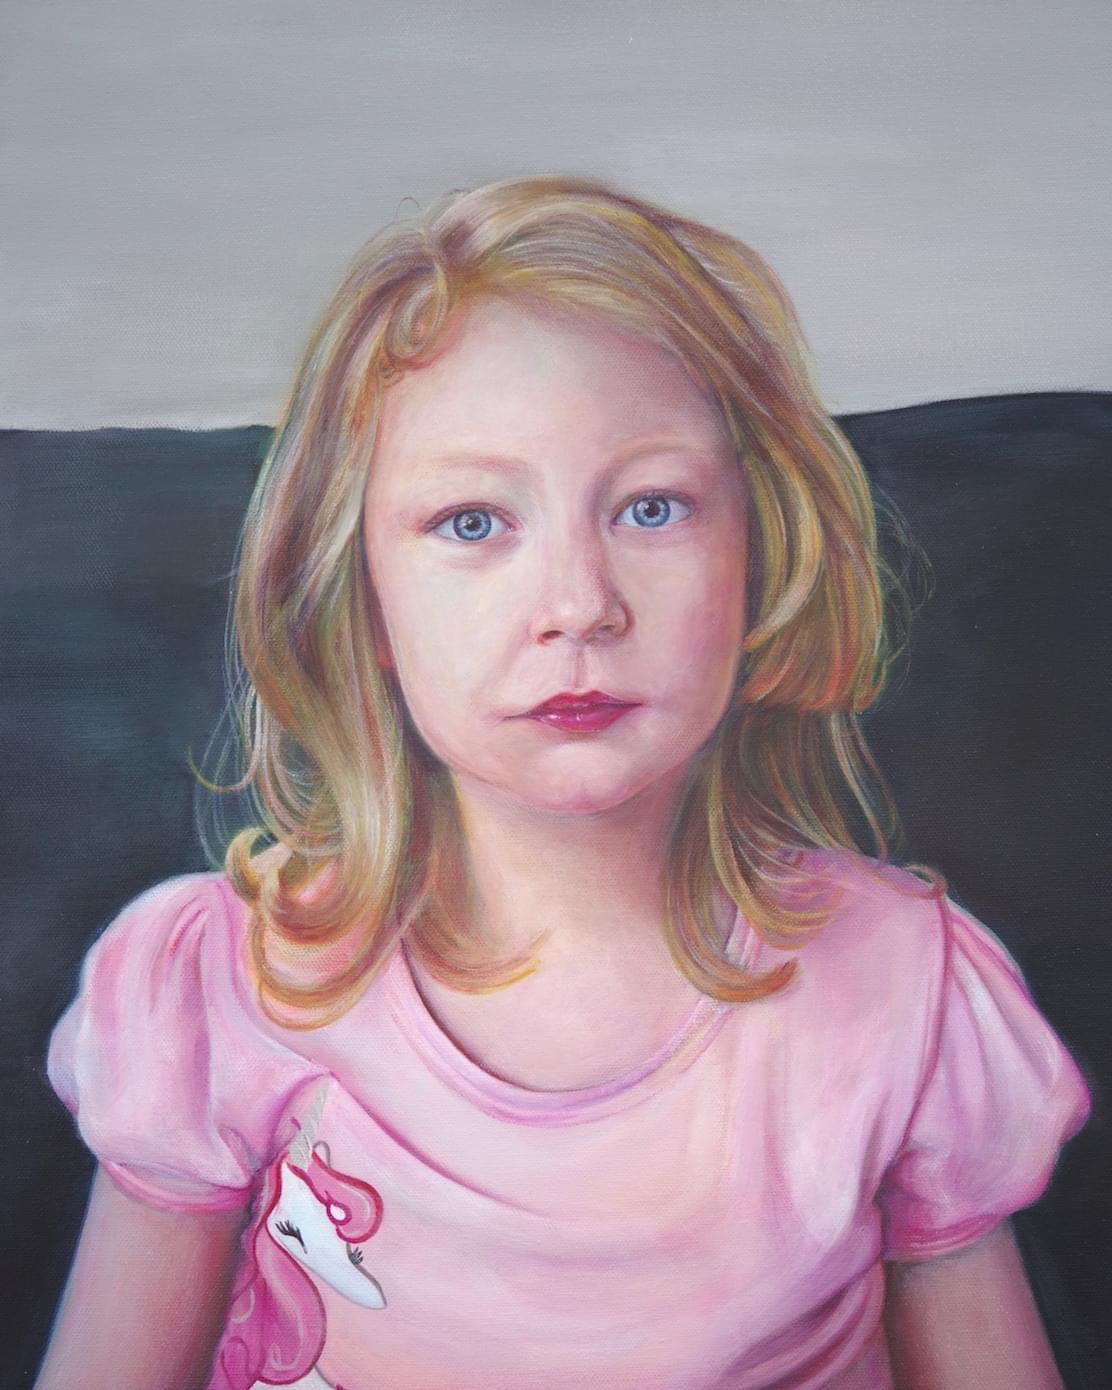 Photo of Emma at 4 painting